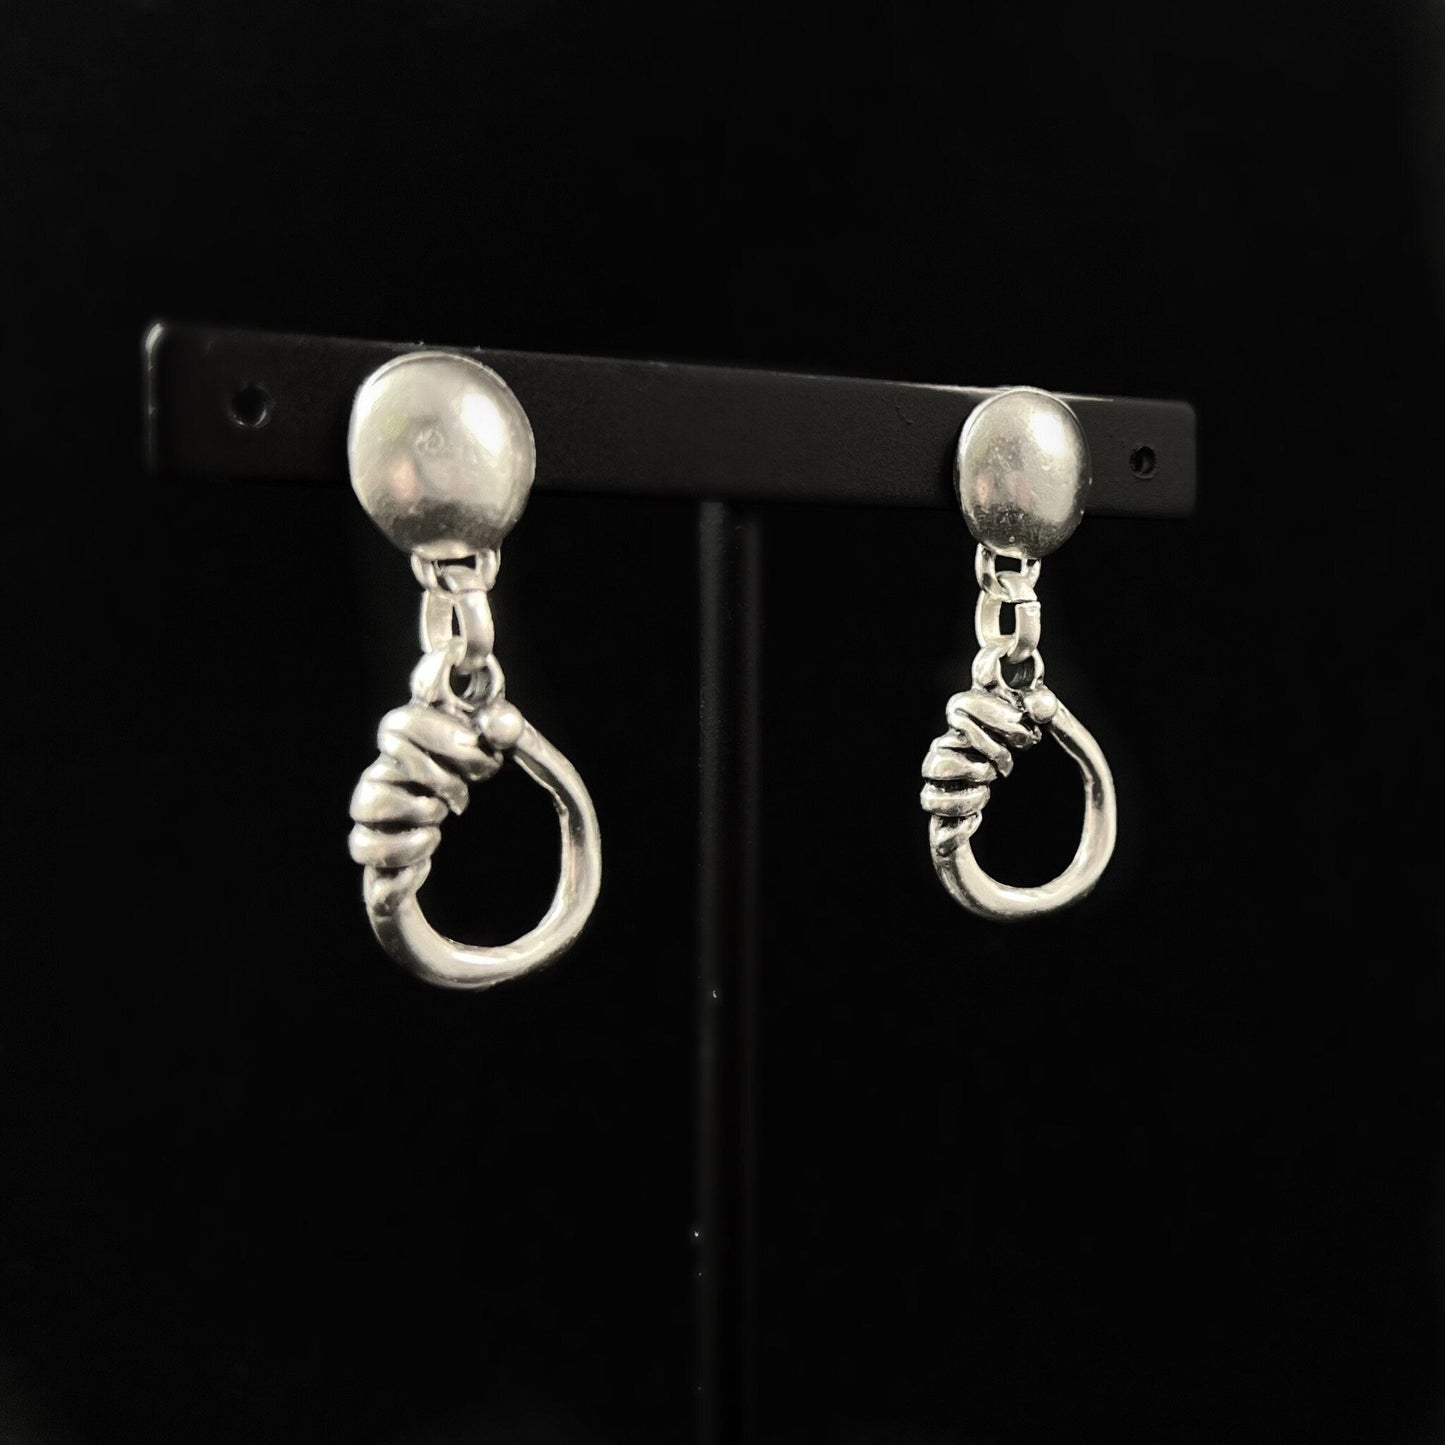 Handmade Silver Celtic Knot Earrings - Handmade, Nickel Free